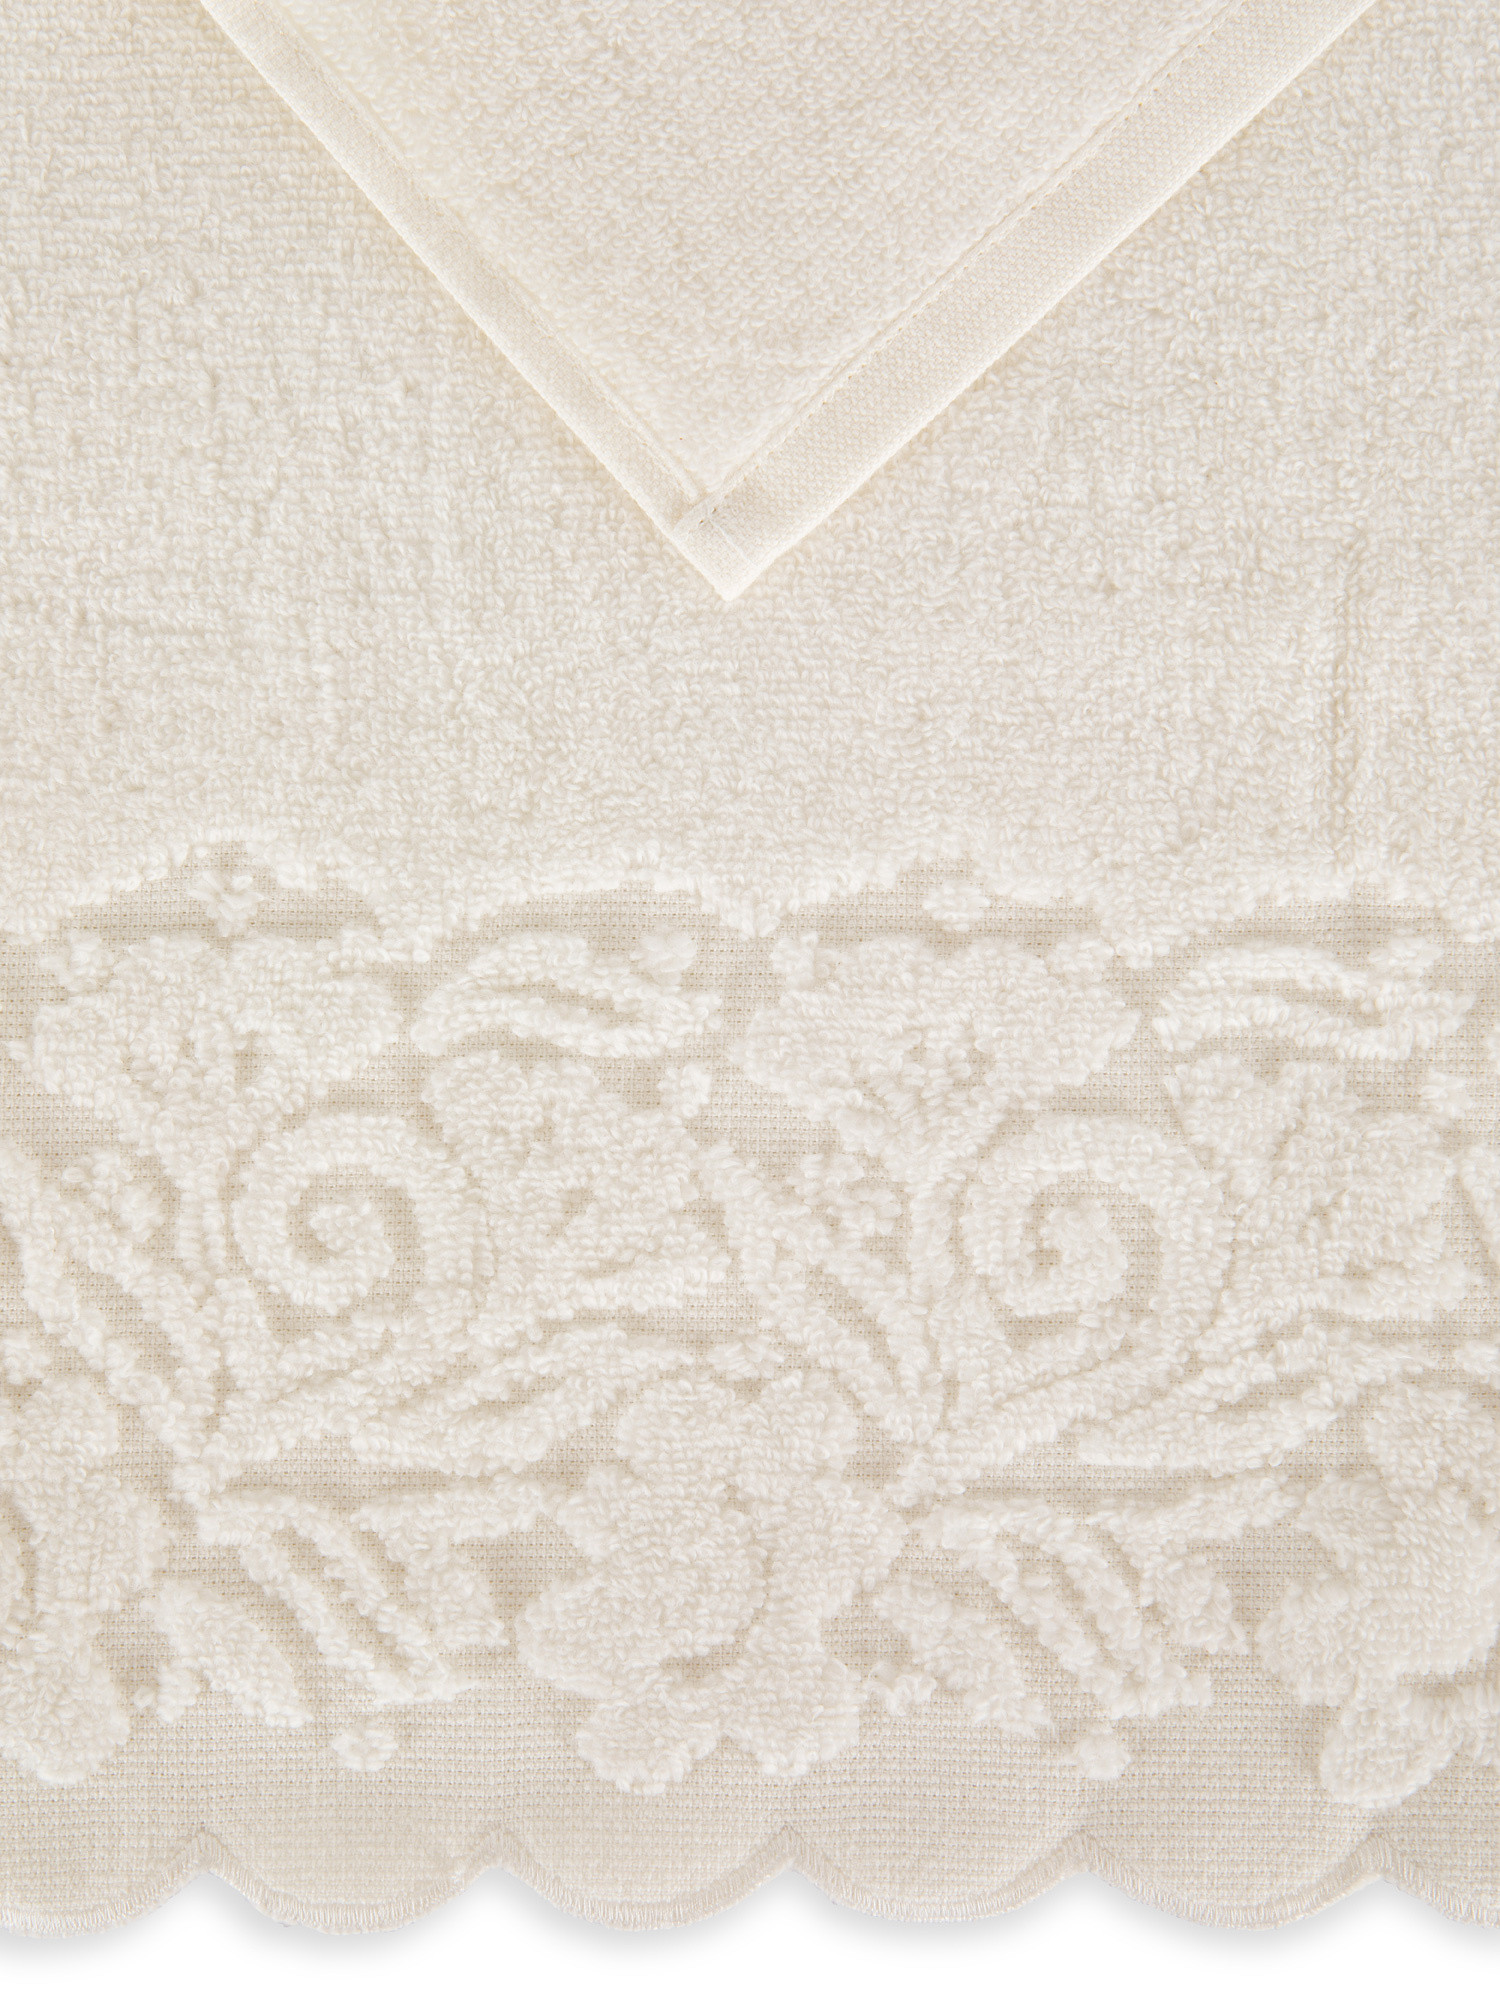 Asciugamano puro cotone bordo jacquard, Bianco, large image number 2